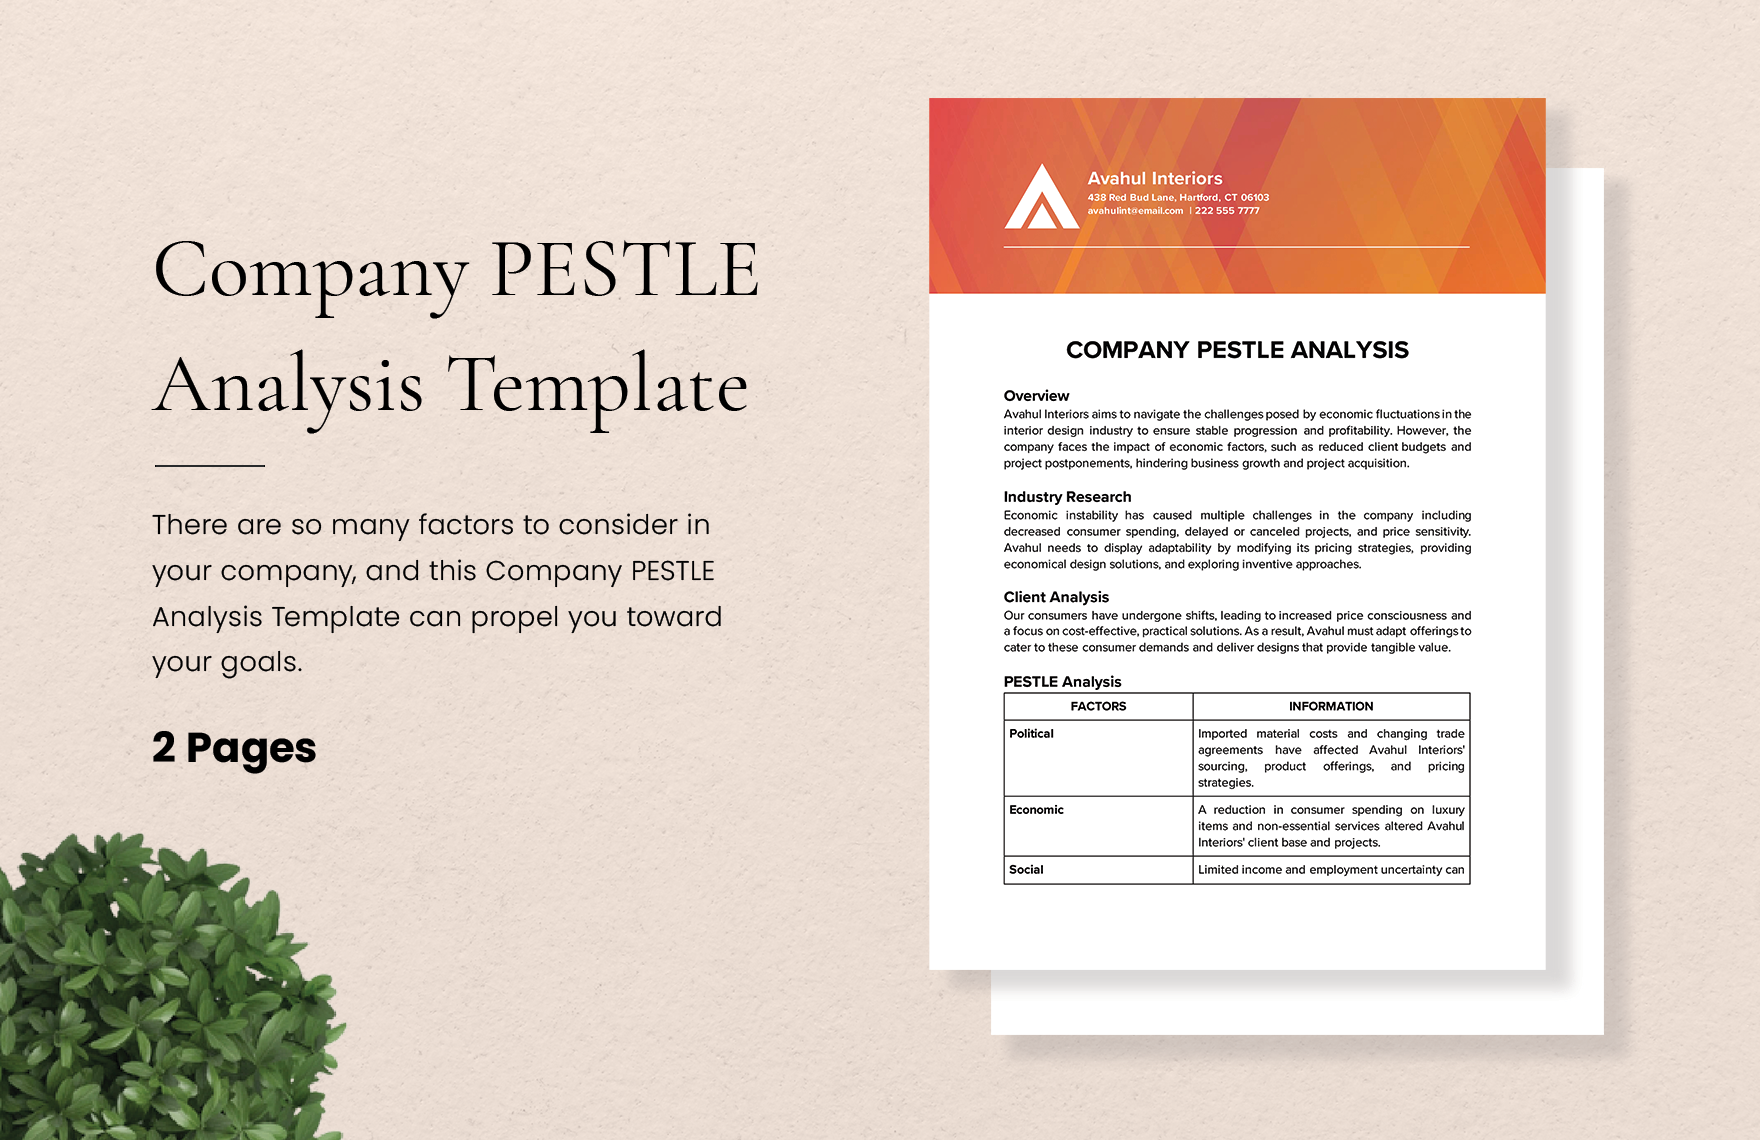 Company PESTLE Analysis Template